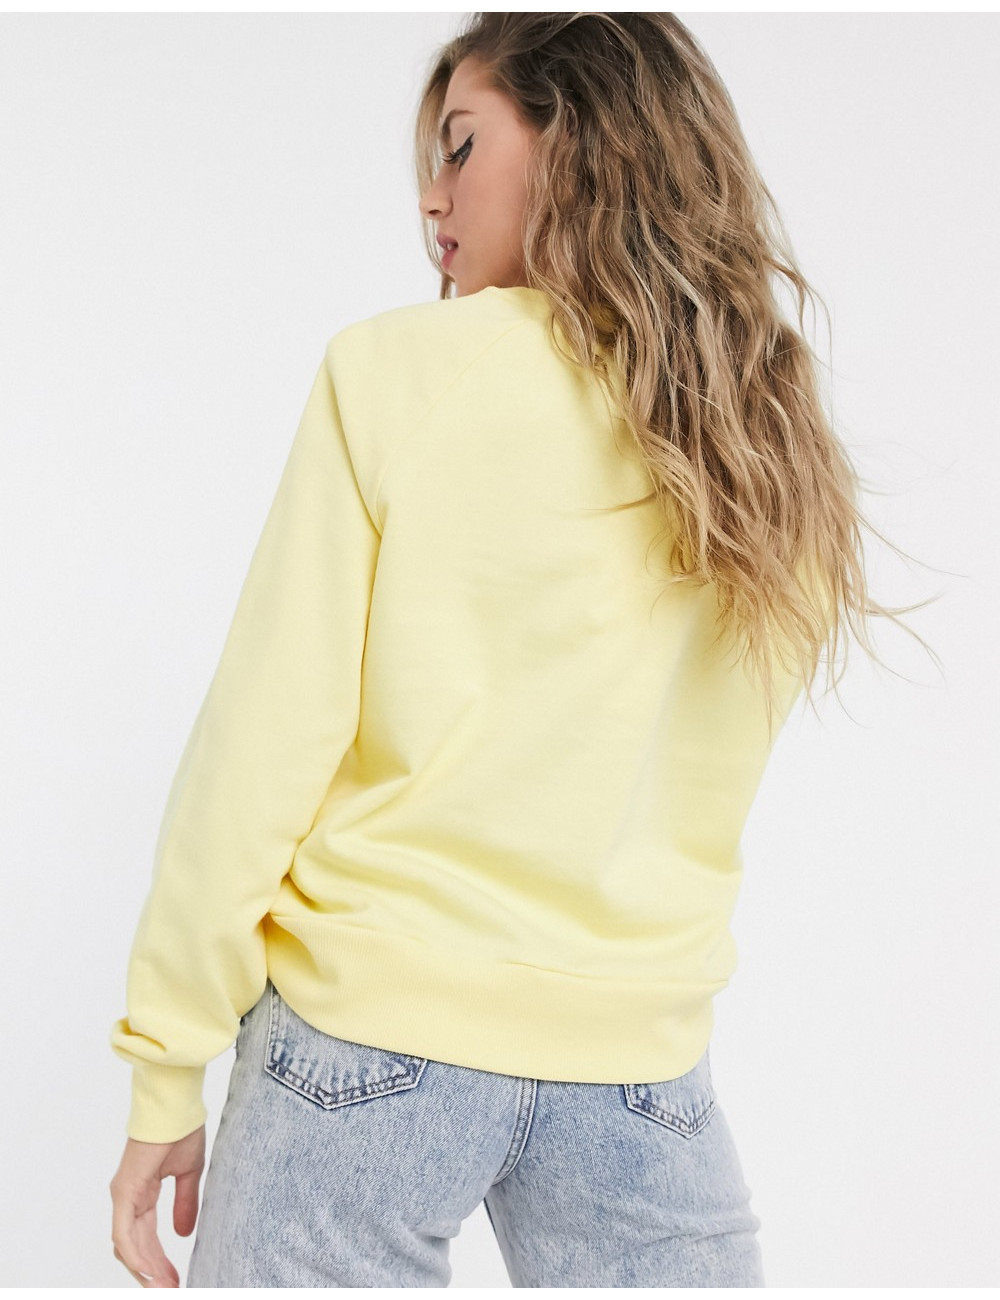 Vila sweatshirt in yellow